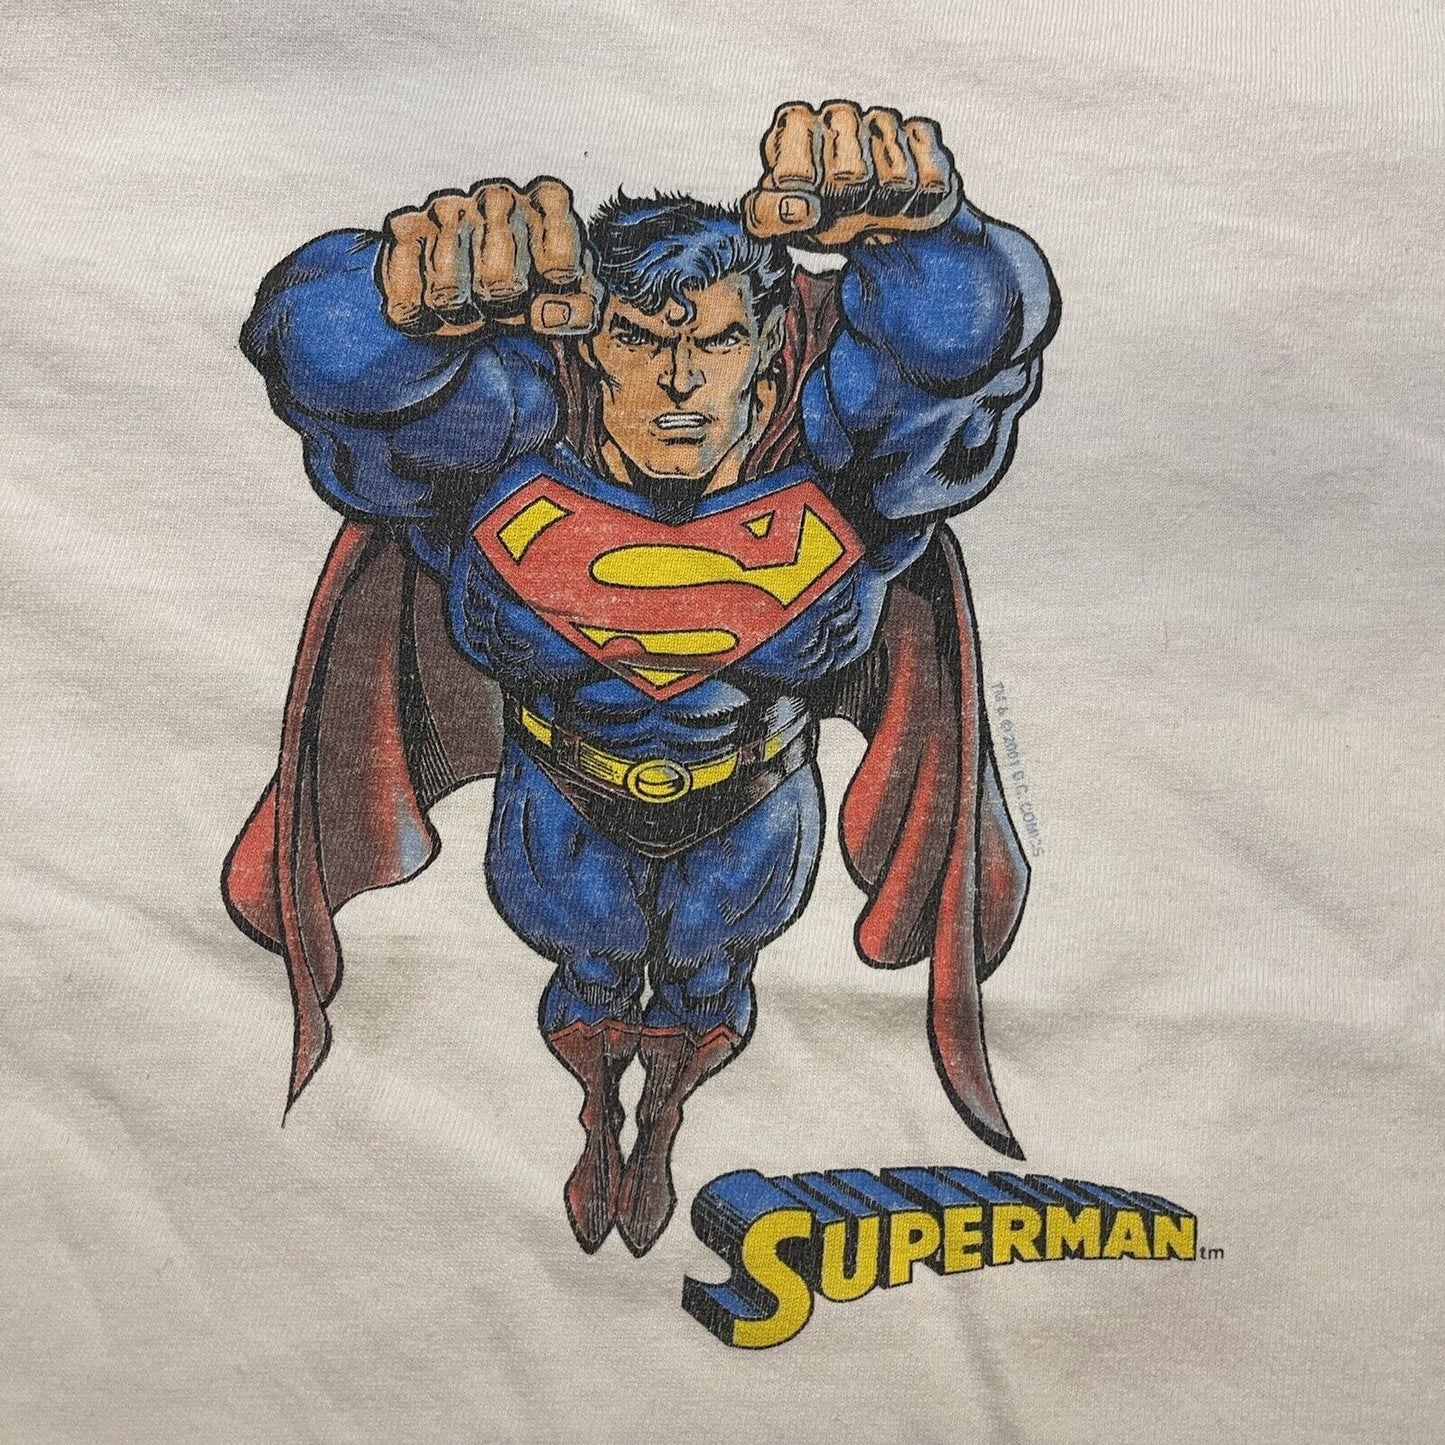 2001 Superman T Shirt Size Medium